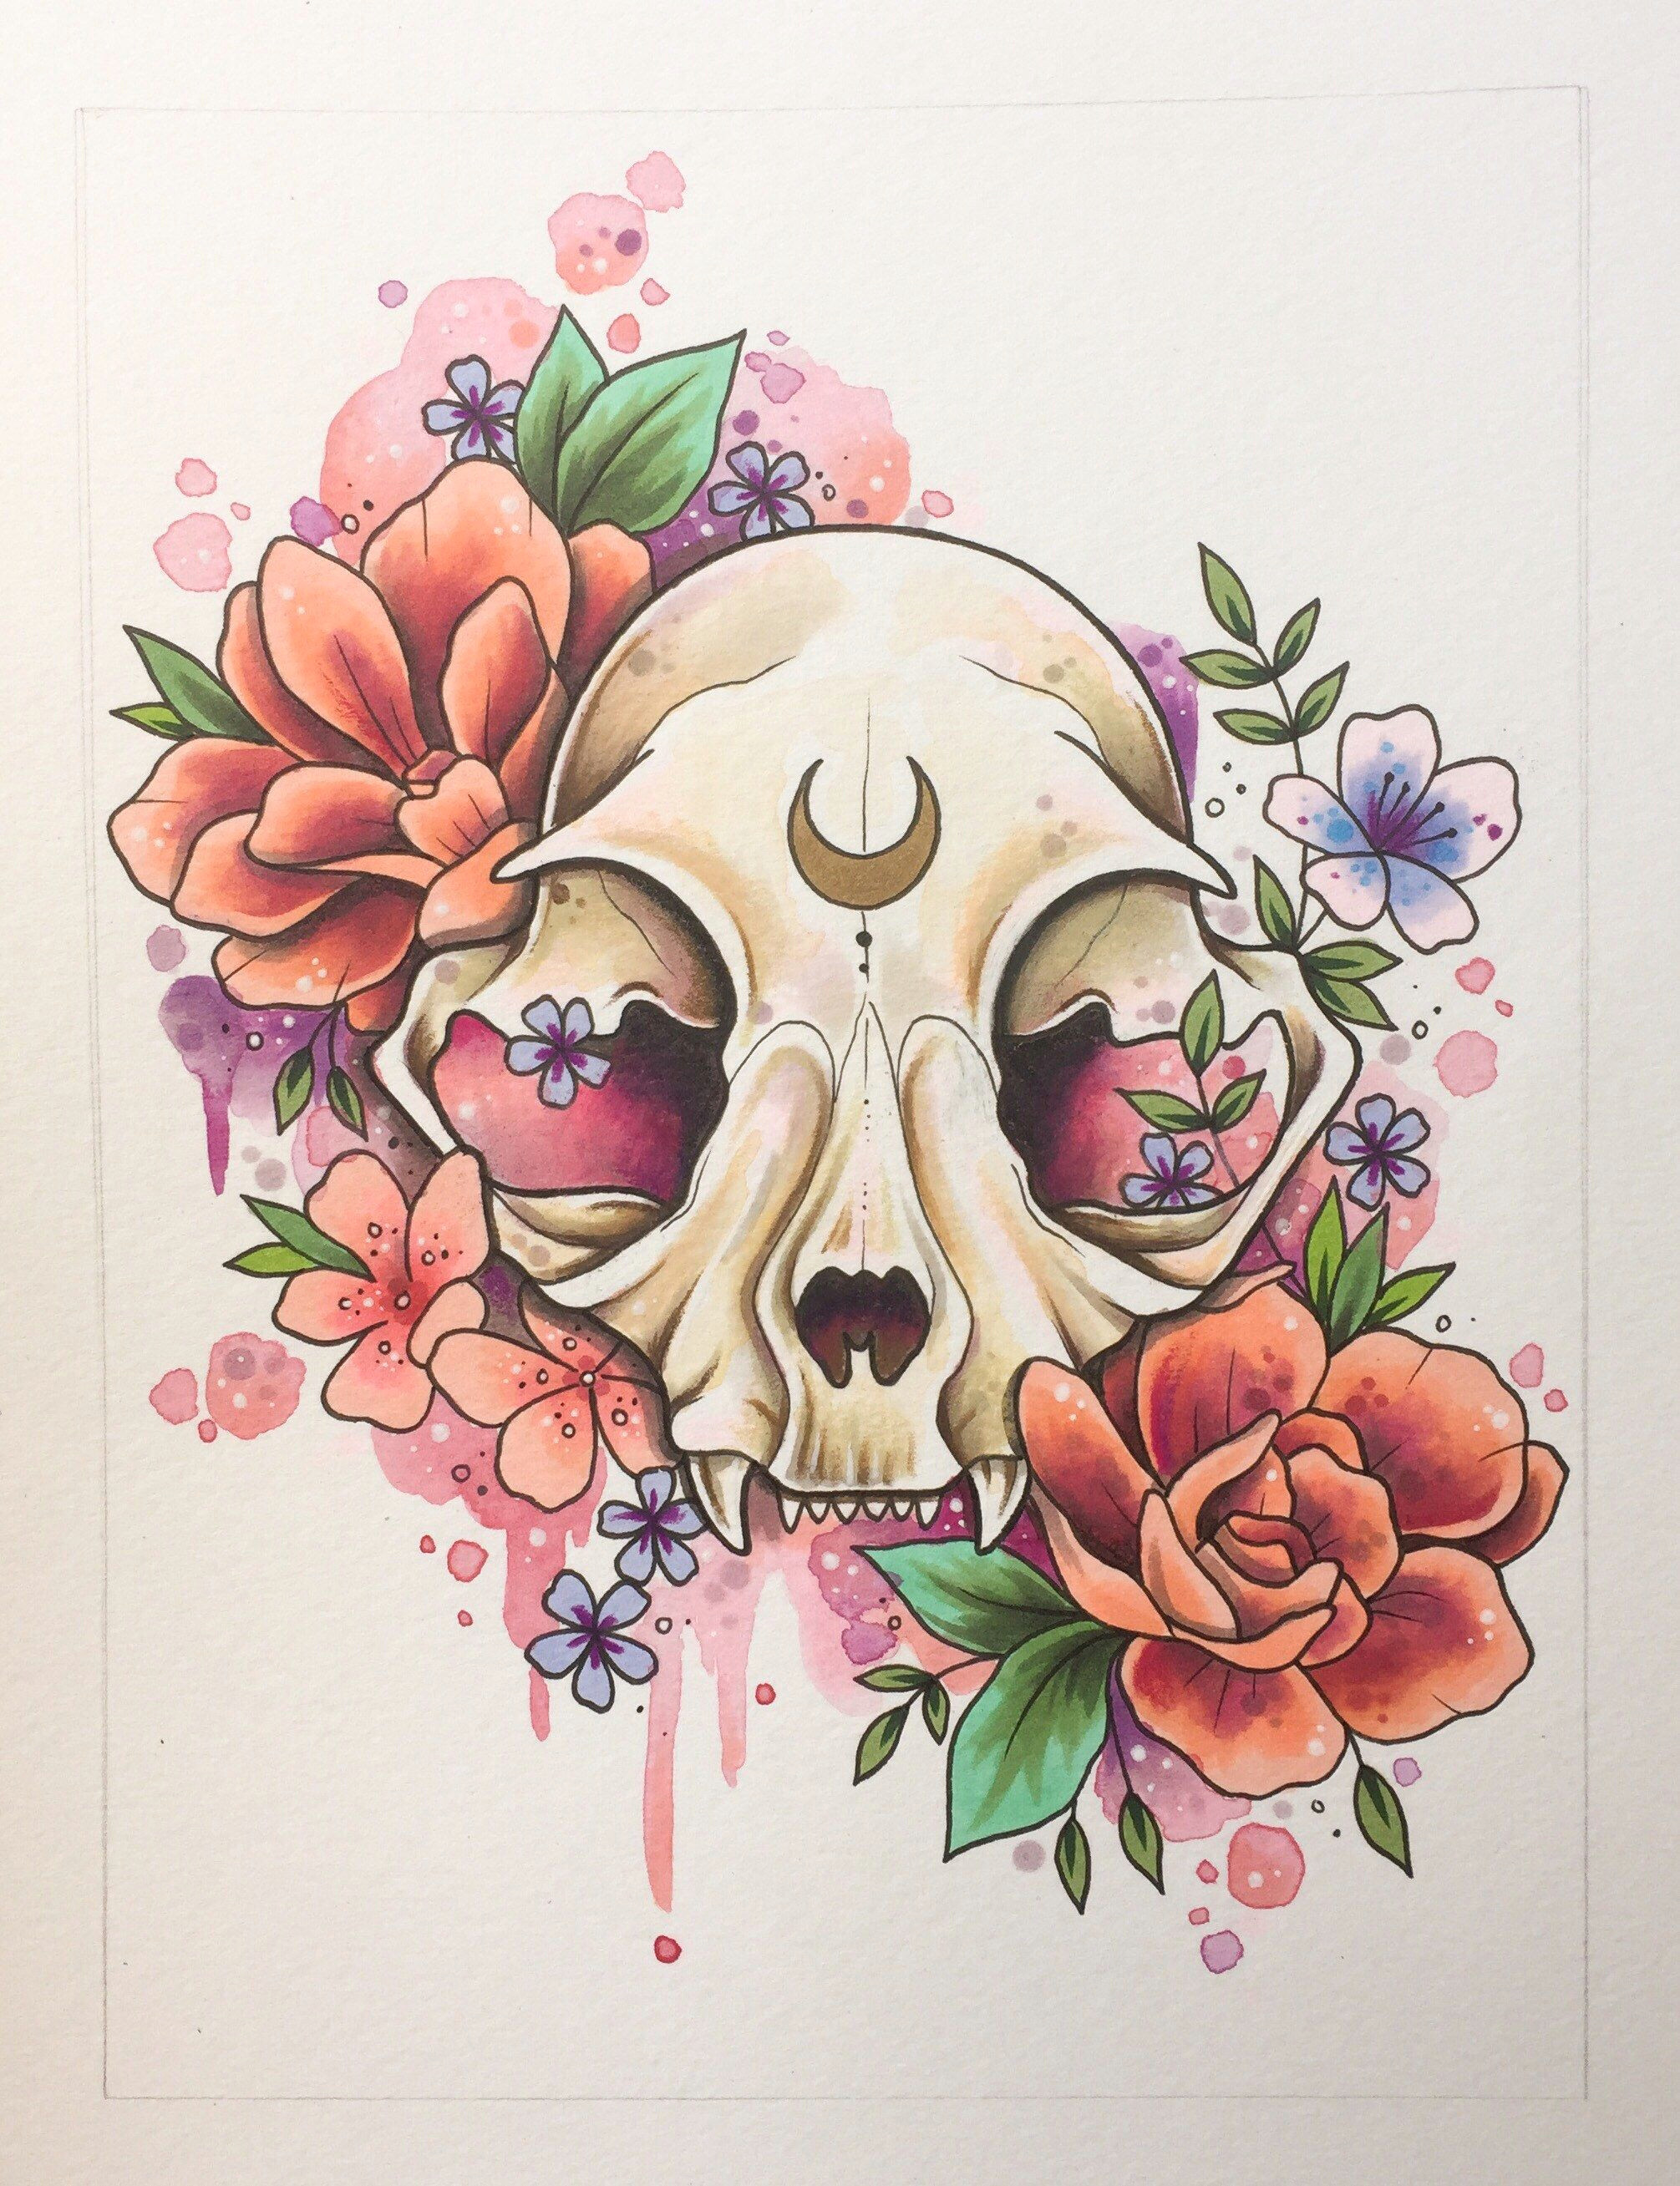 Drawings Of Flowers and Skulls Cat Skull Painting Tattoo Print Tattoo Design Cat Illustration